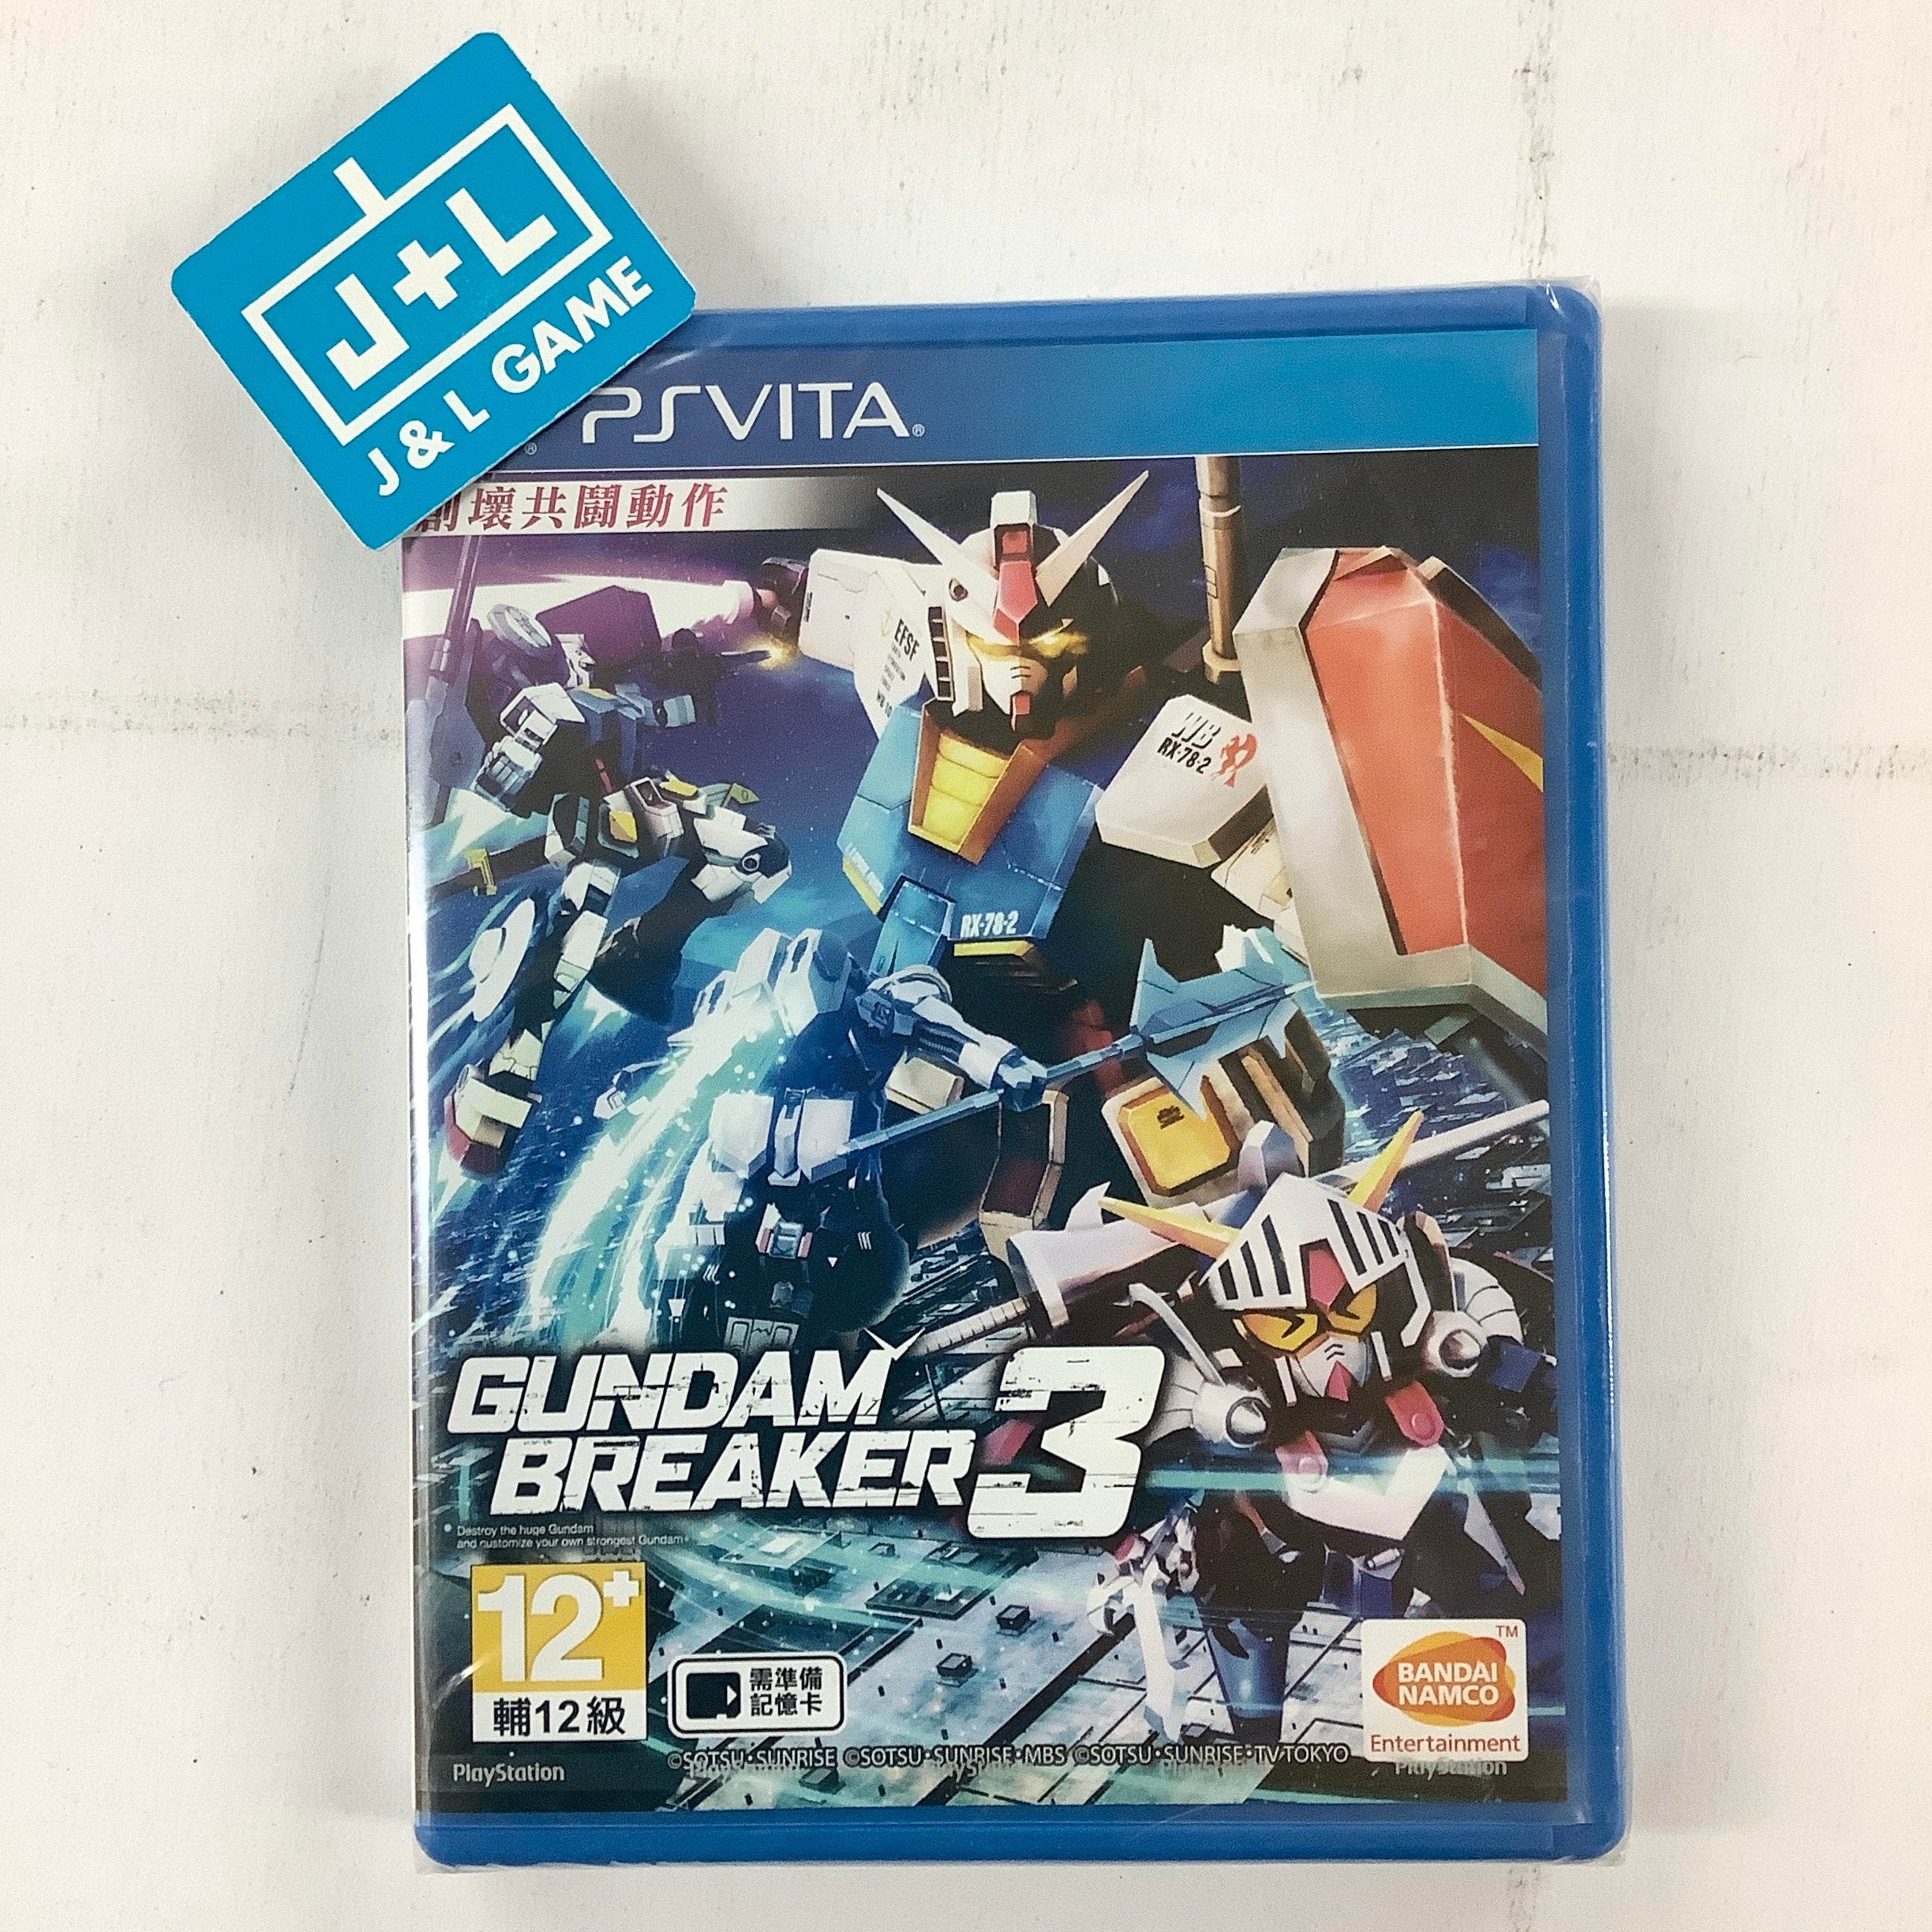 Gundam Breaker 3 (Chinese Sub) - (PSV) PlayStation Vita (Asia Import) Video Games J&L Video Games New York City   